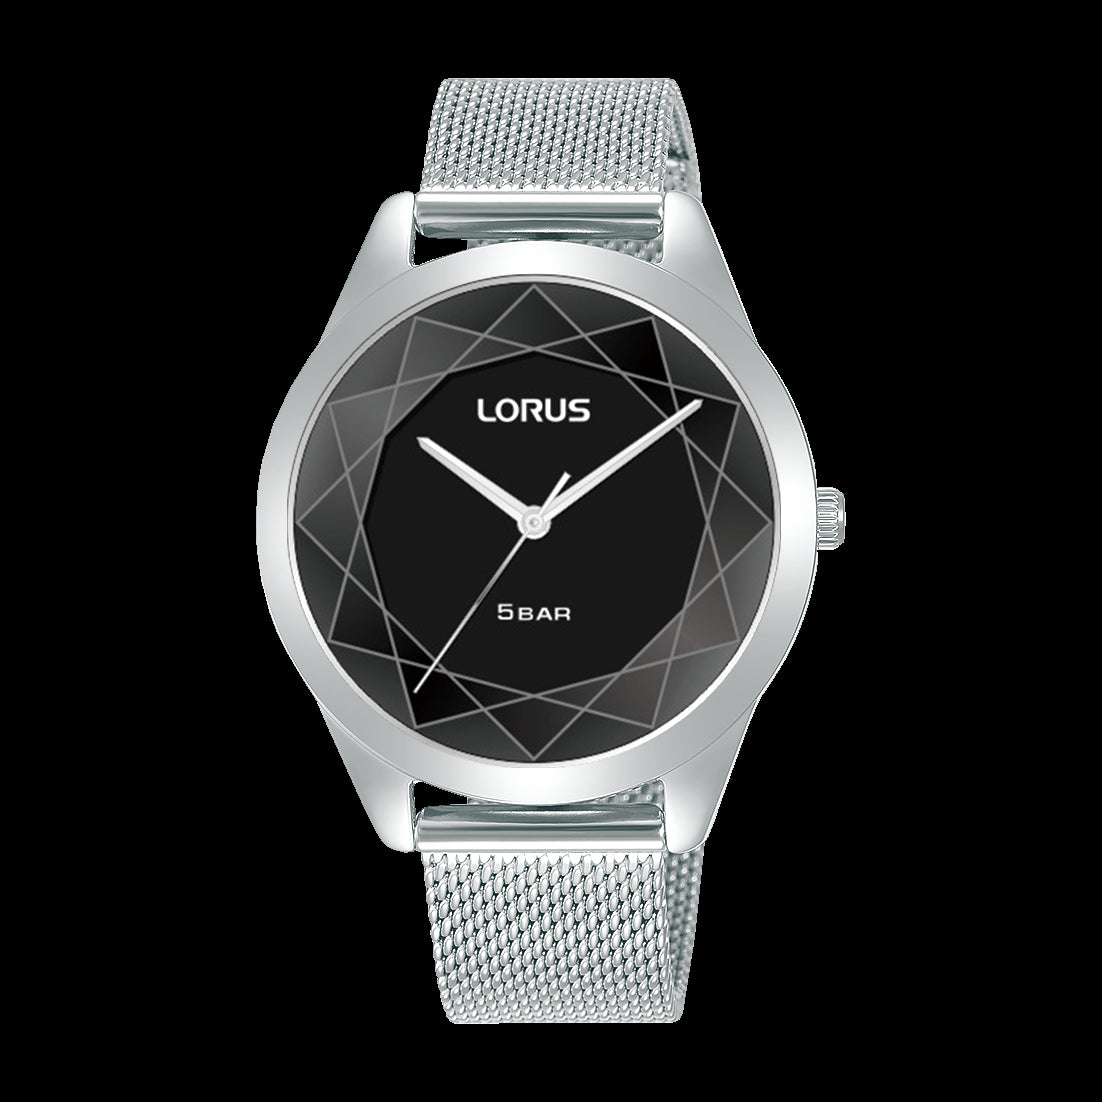 Lorus Ladies Dress Silver Coloured Watch